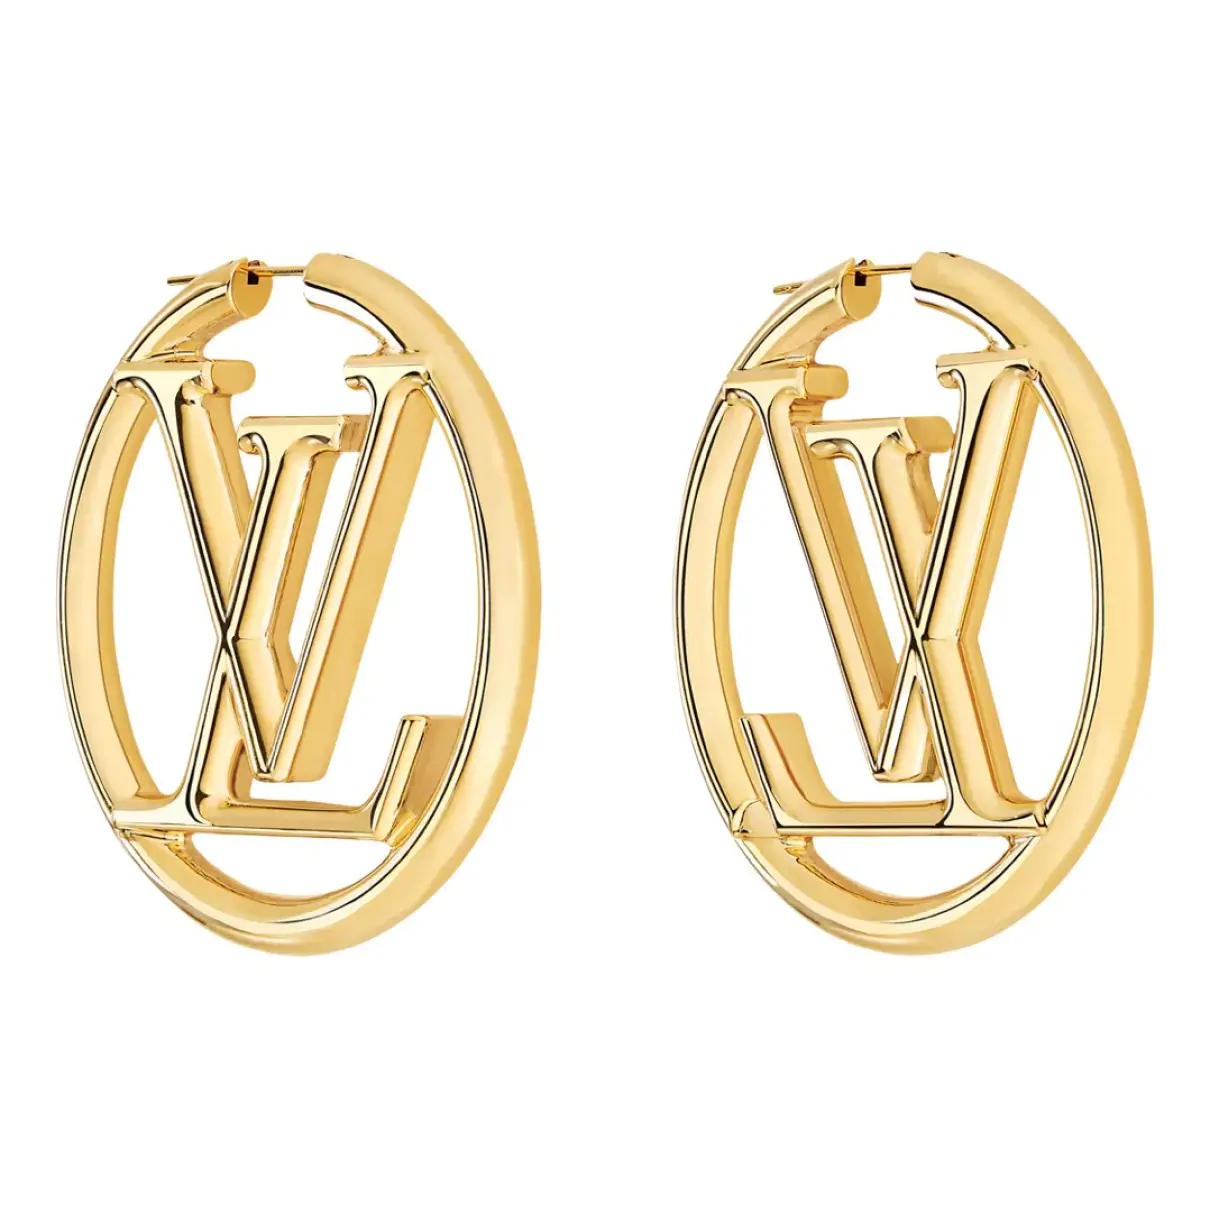 LV Iconic earrings Louis Vuitton